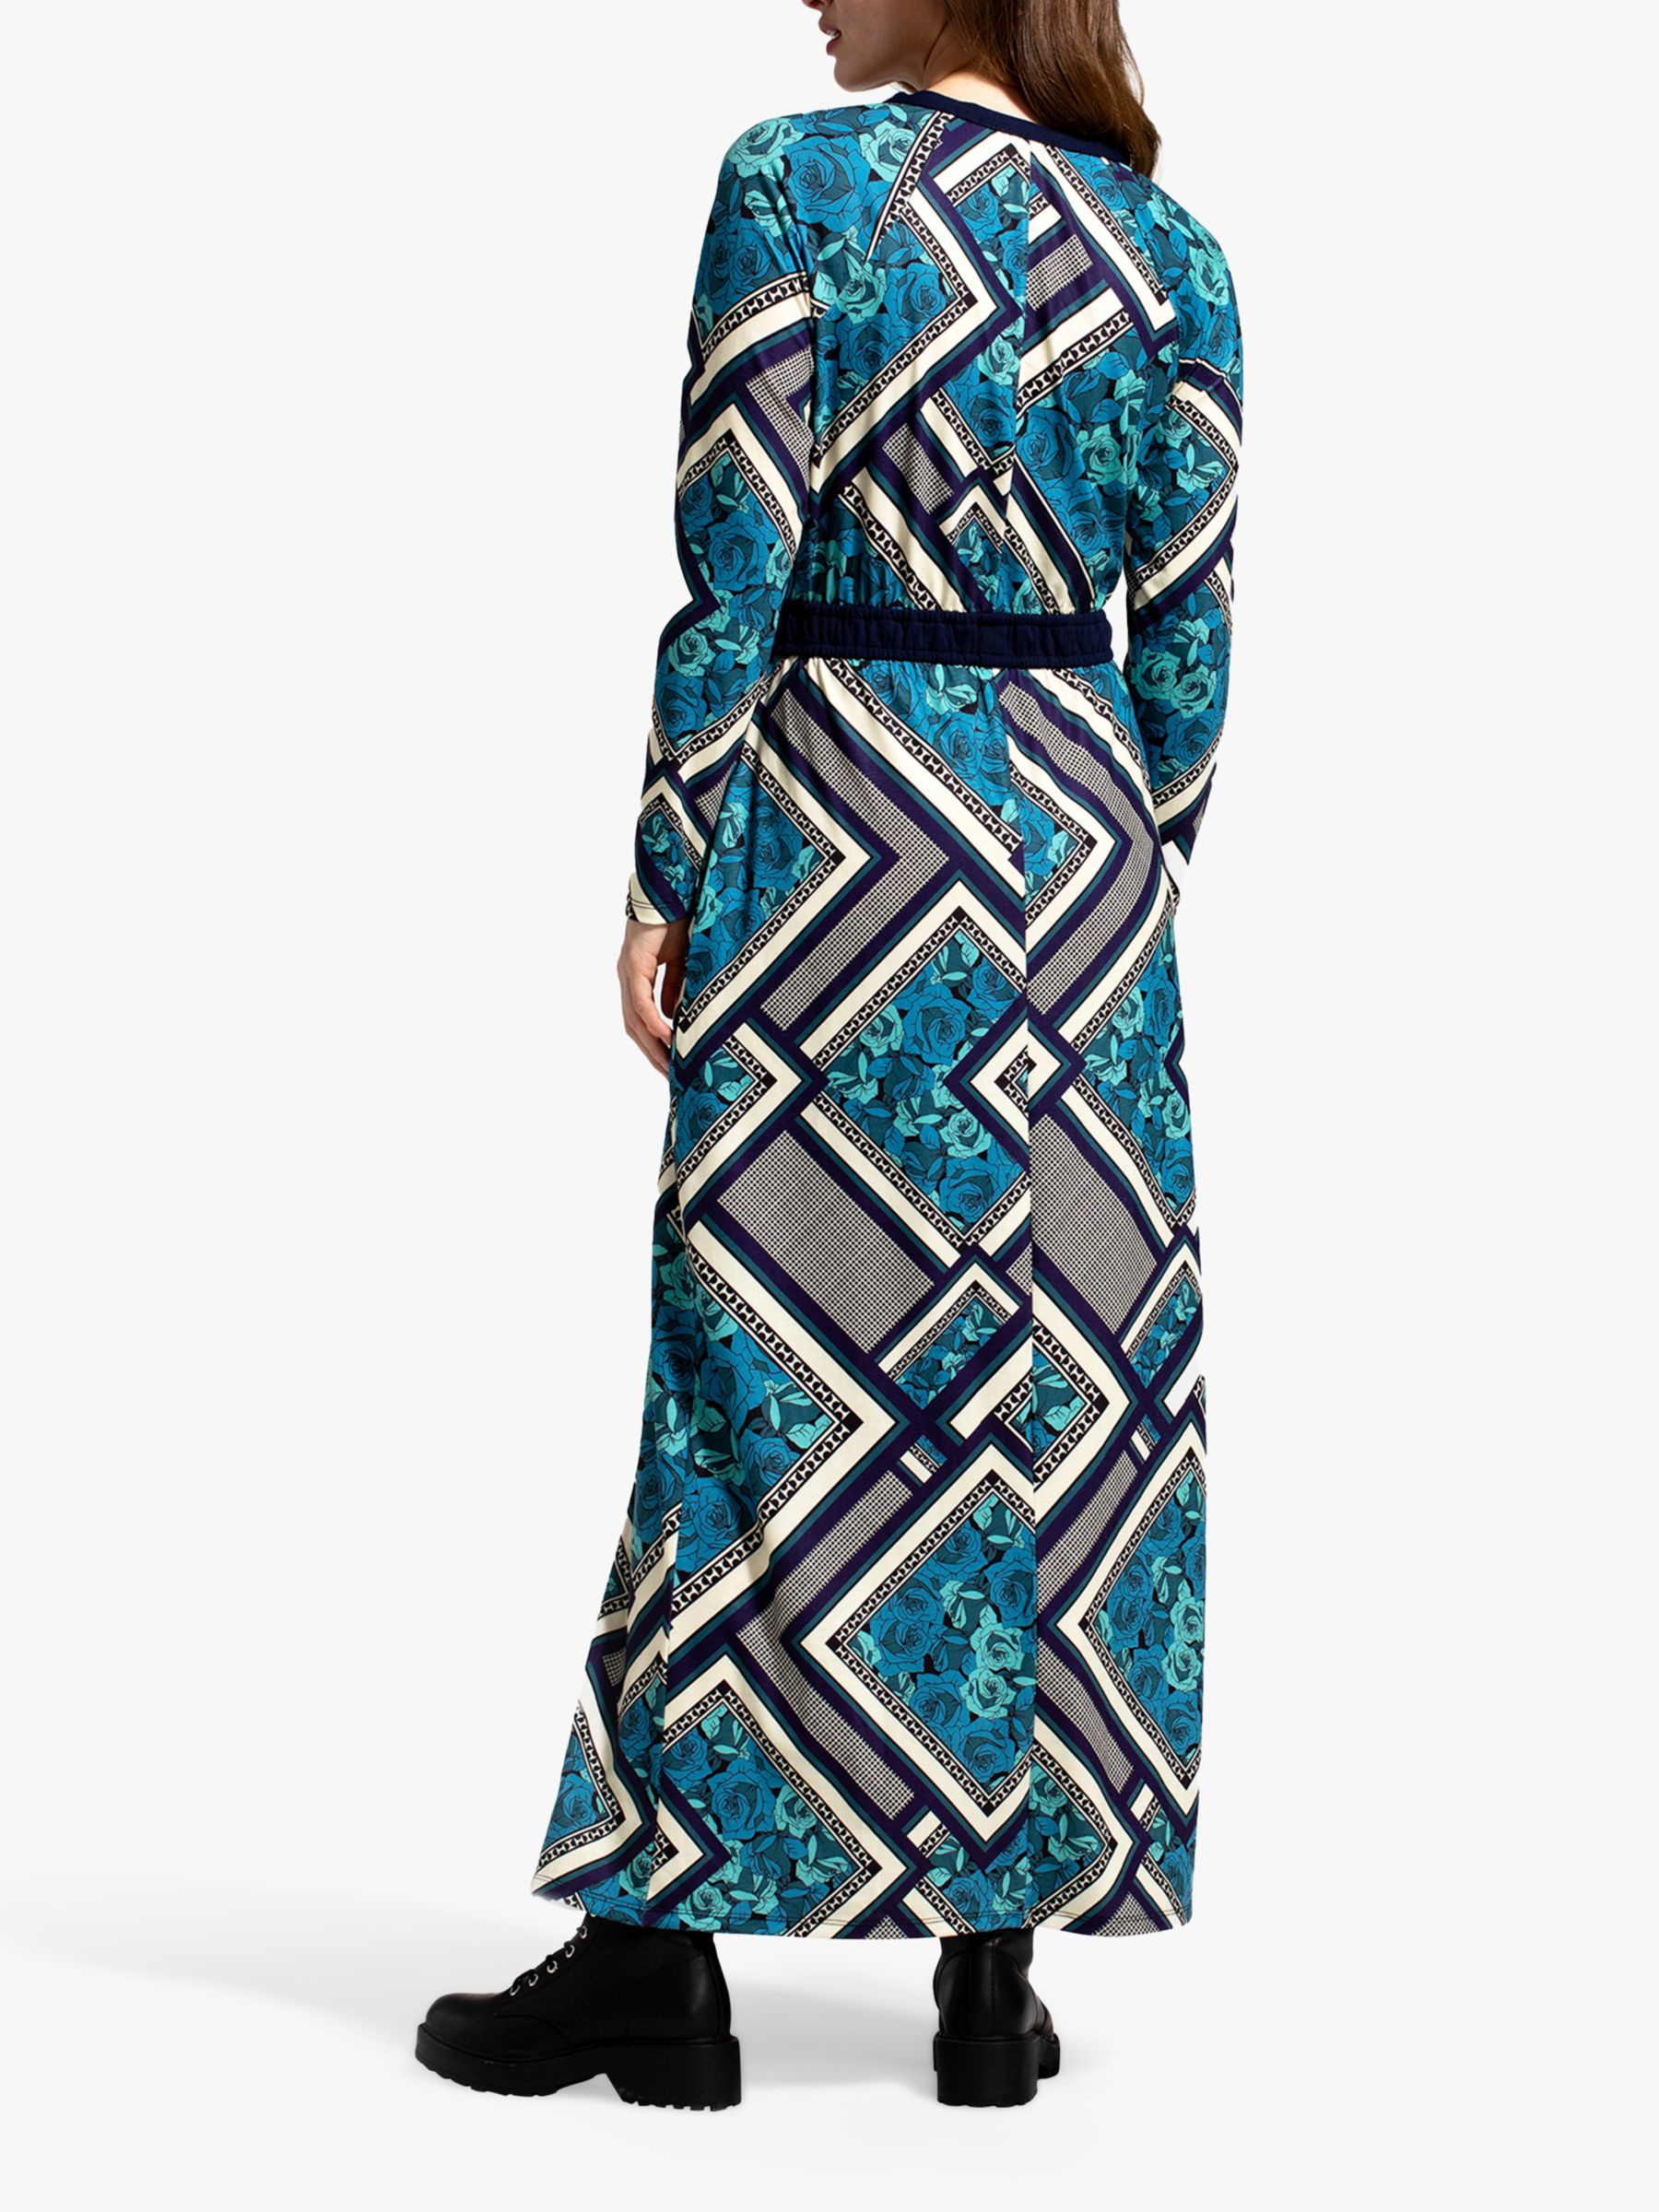 HotSquash Retro Tile Print Long Sleeve Maxi Dress, Teal/Multi, 8